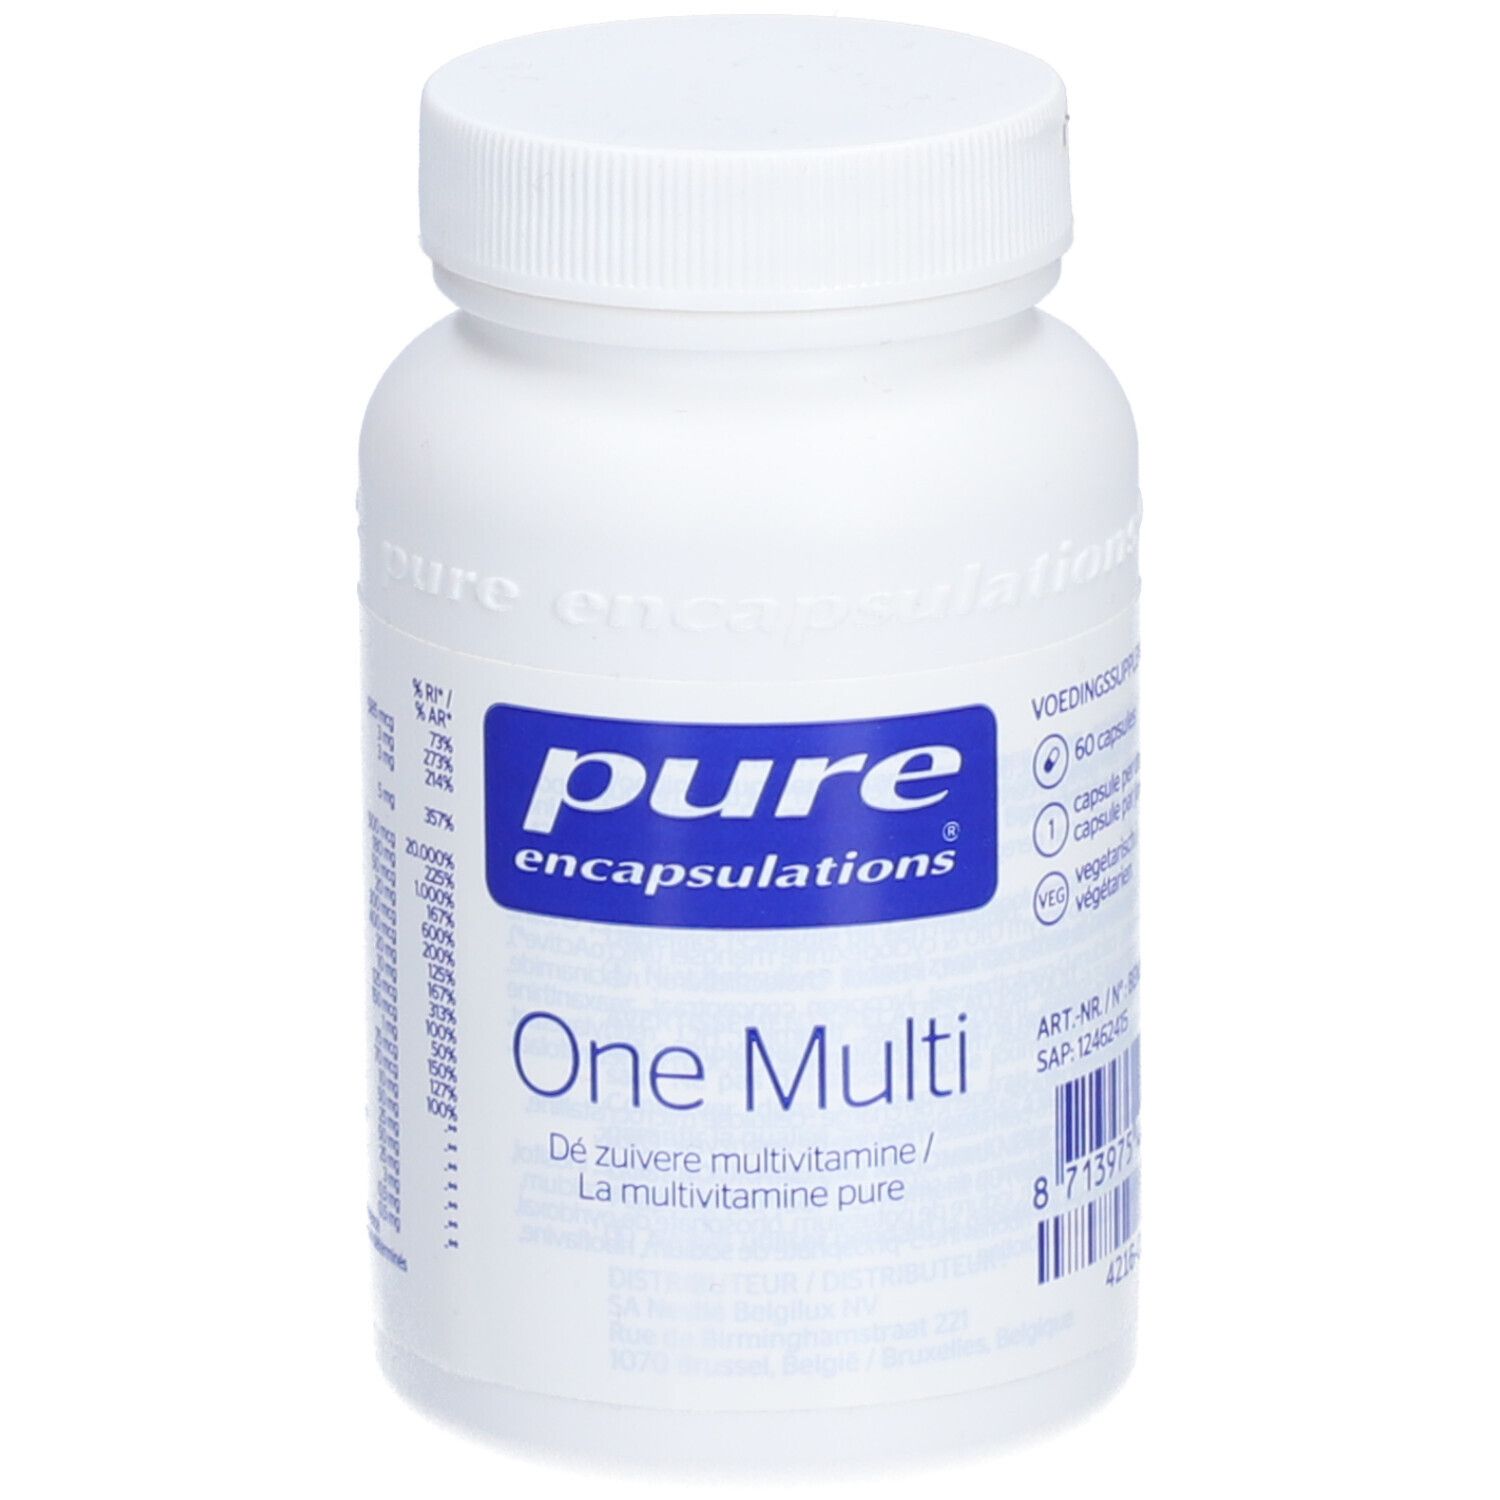 Image of pure encapsulations® One Multi